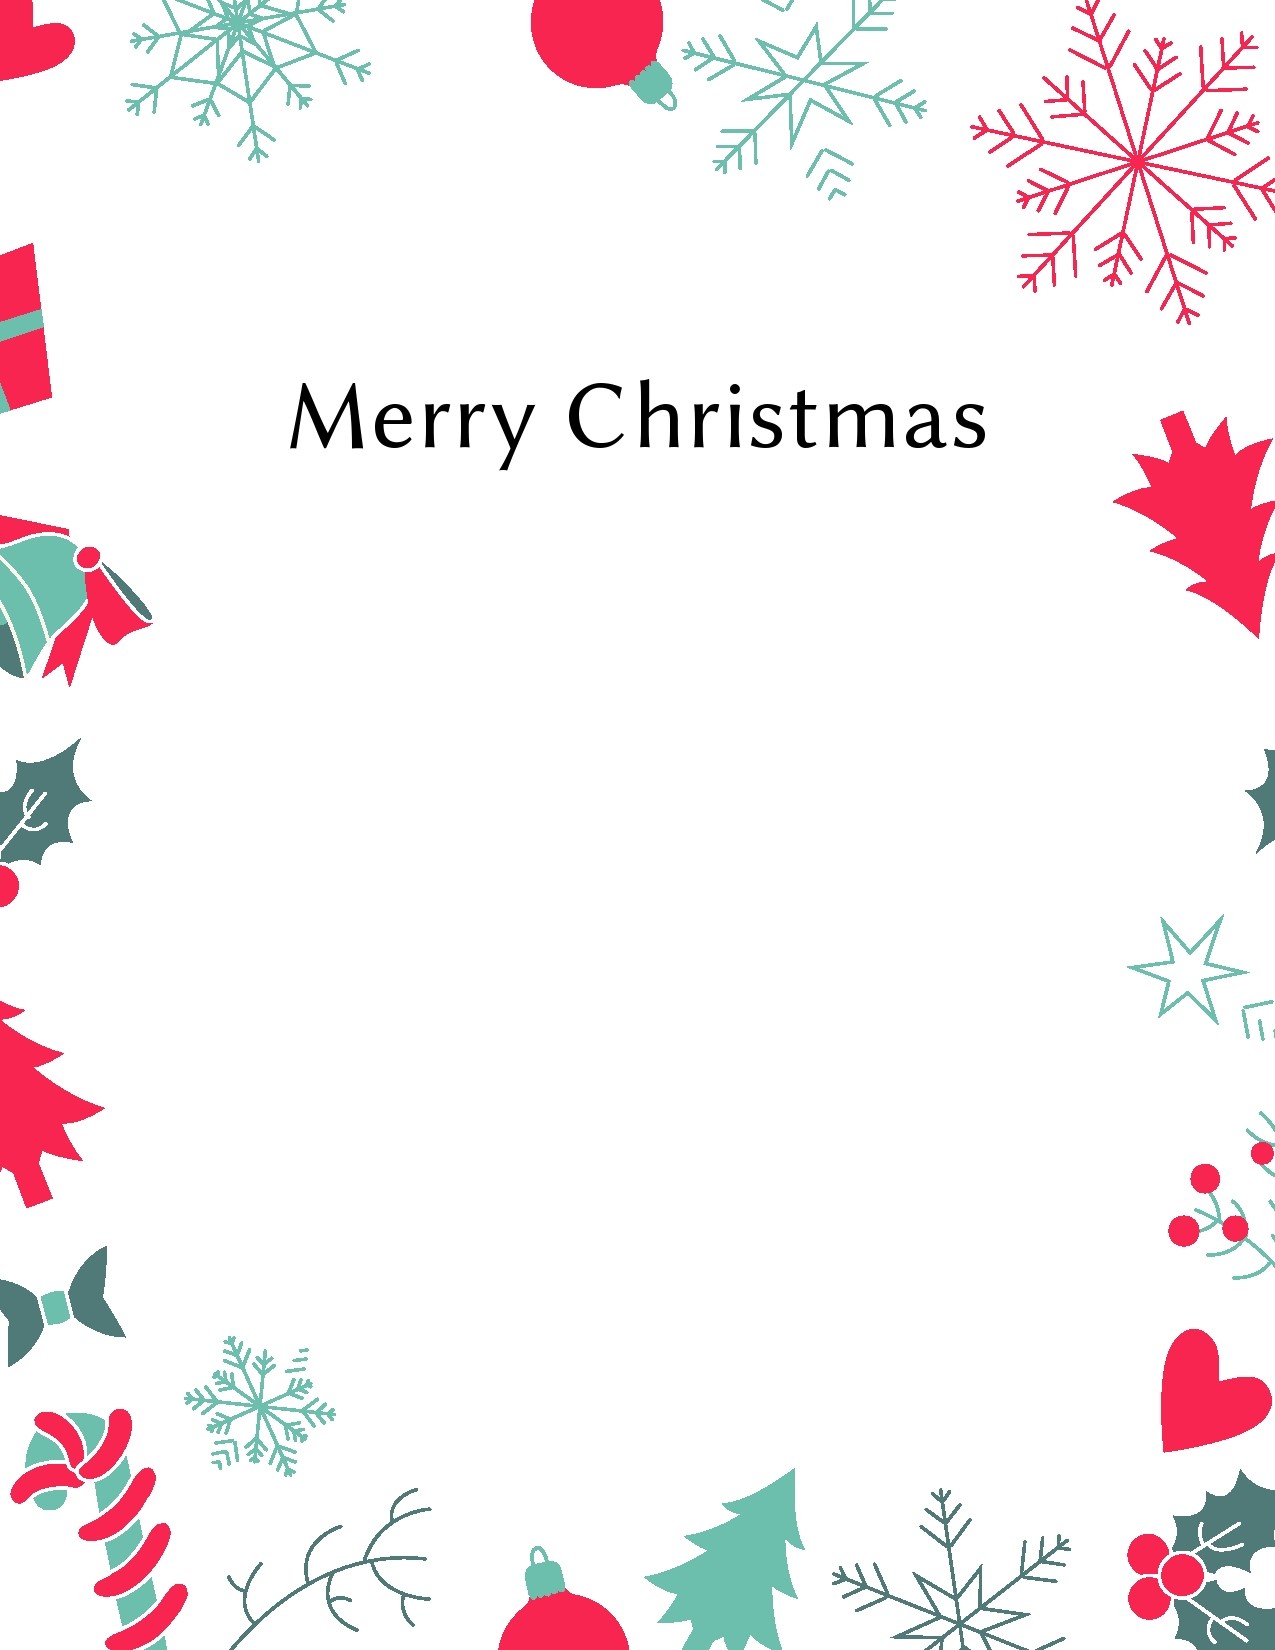 45 Printable Christmas Letter Templates 100% FREE ᐅ TemplateLab